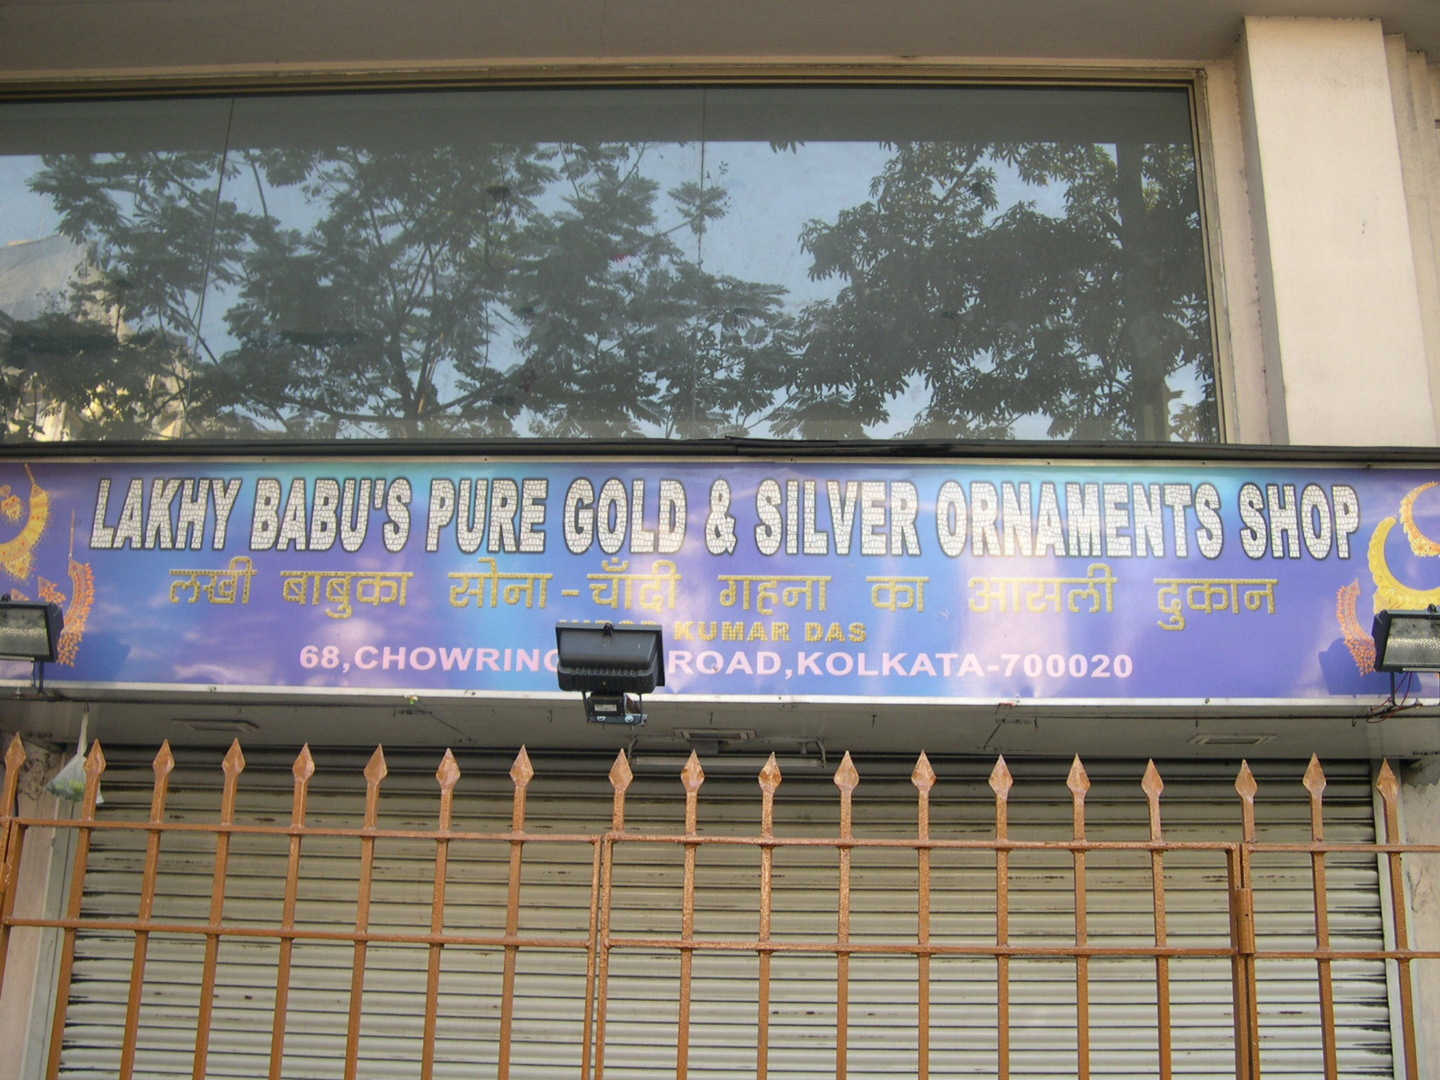 Kolkata shop with baba's name - 9